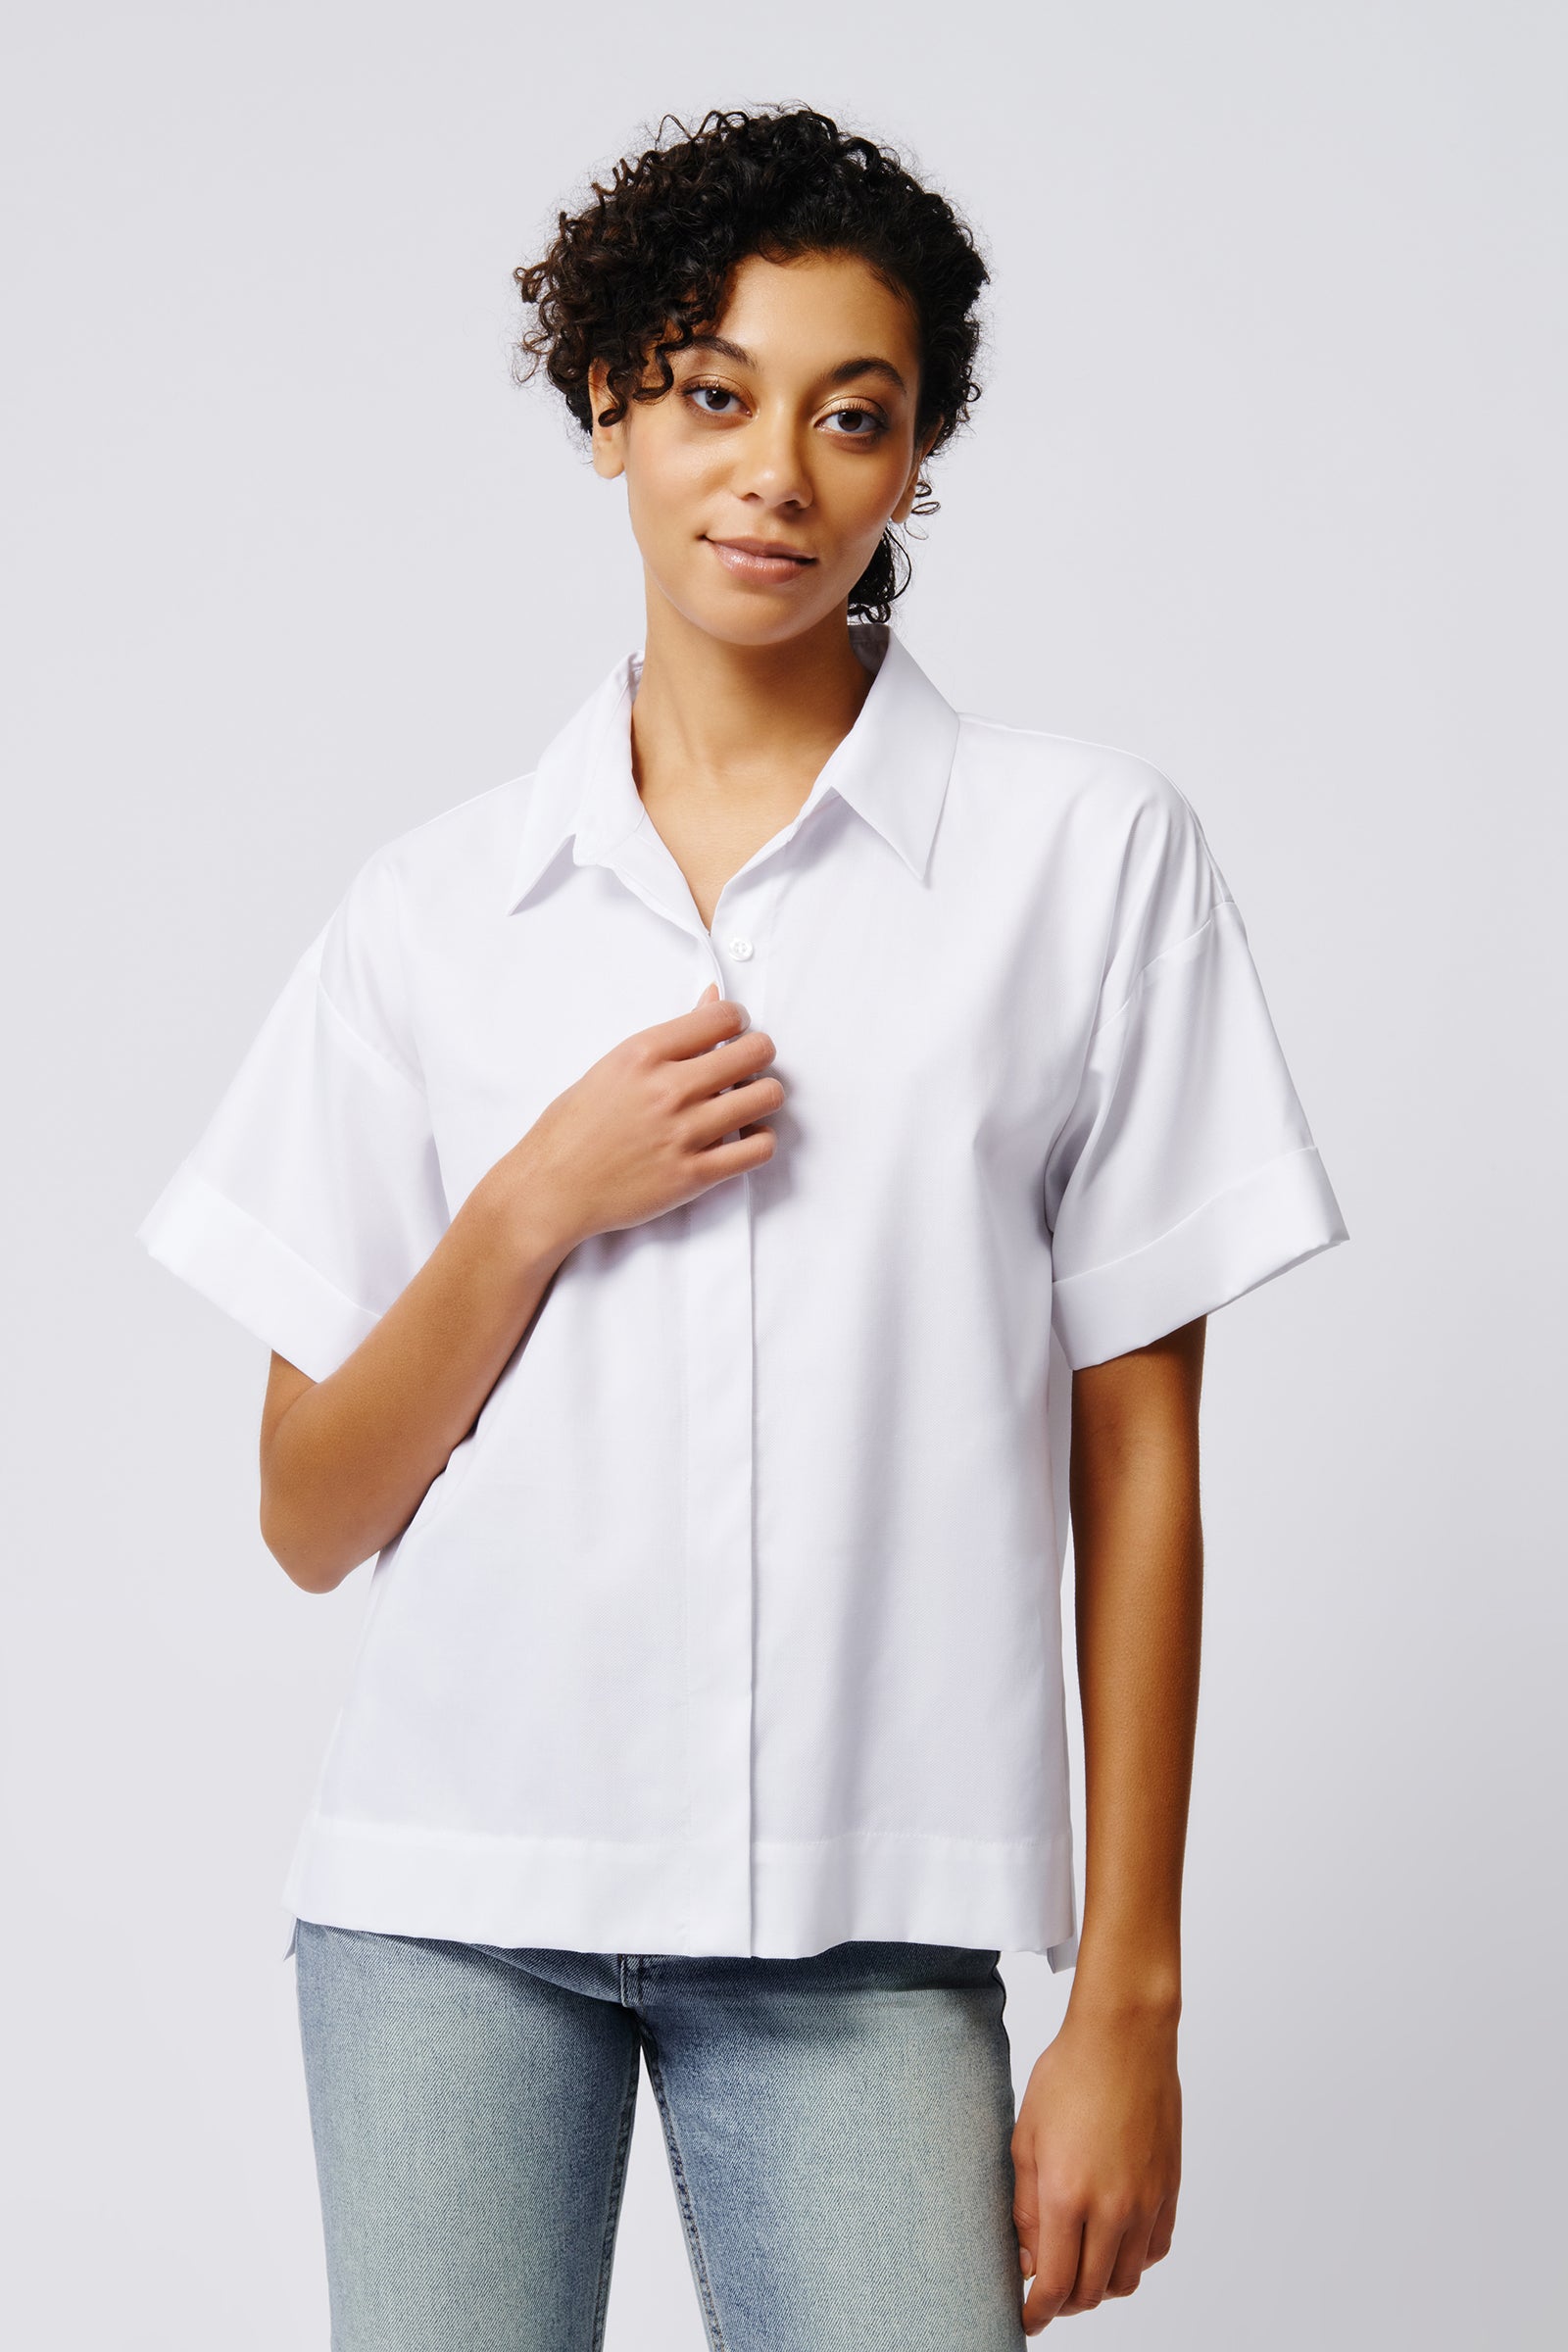 Kal Rieman Billie Cuffed Short Sleeve Shirt in White on Model Front View Crop 6